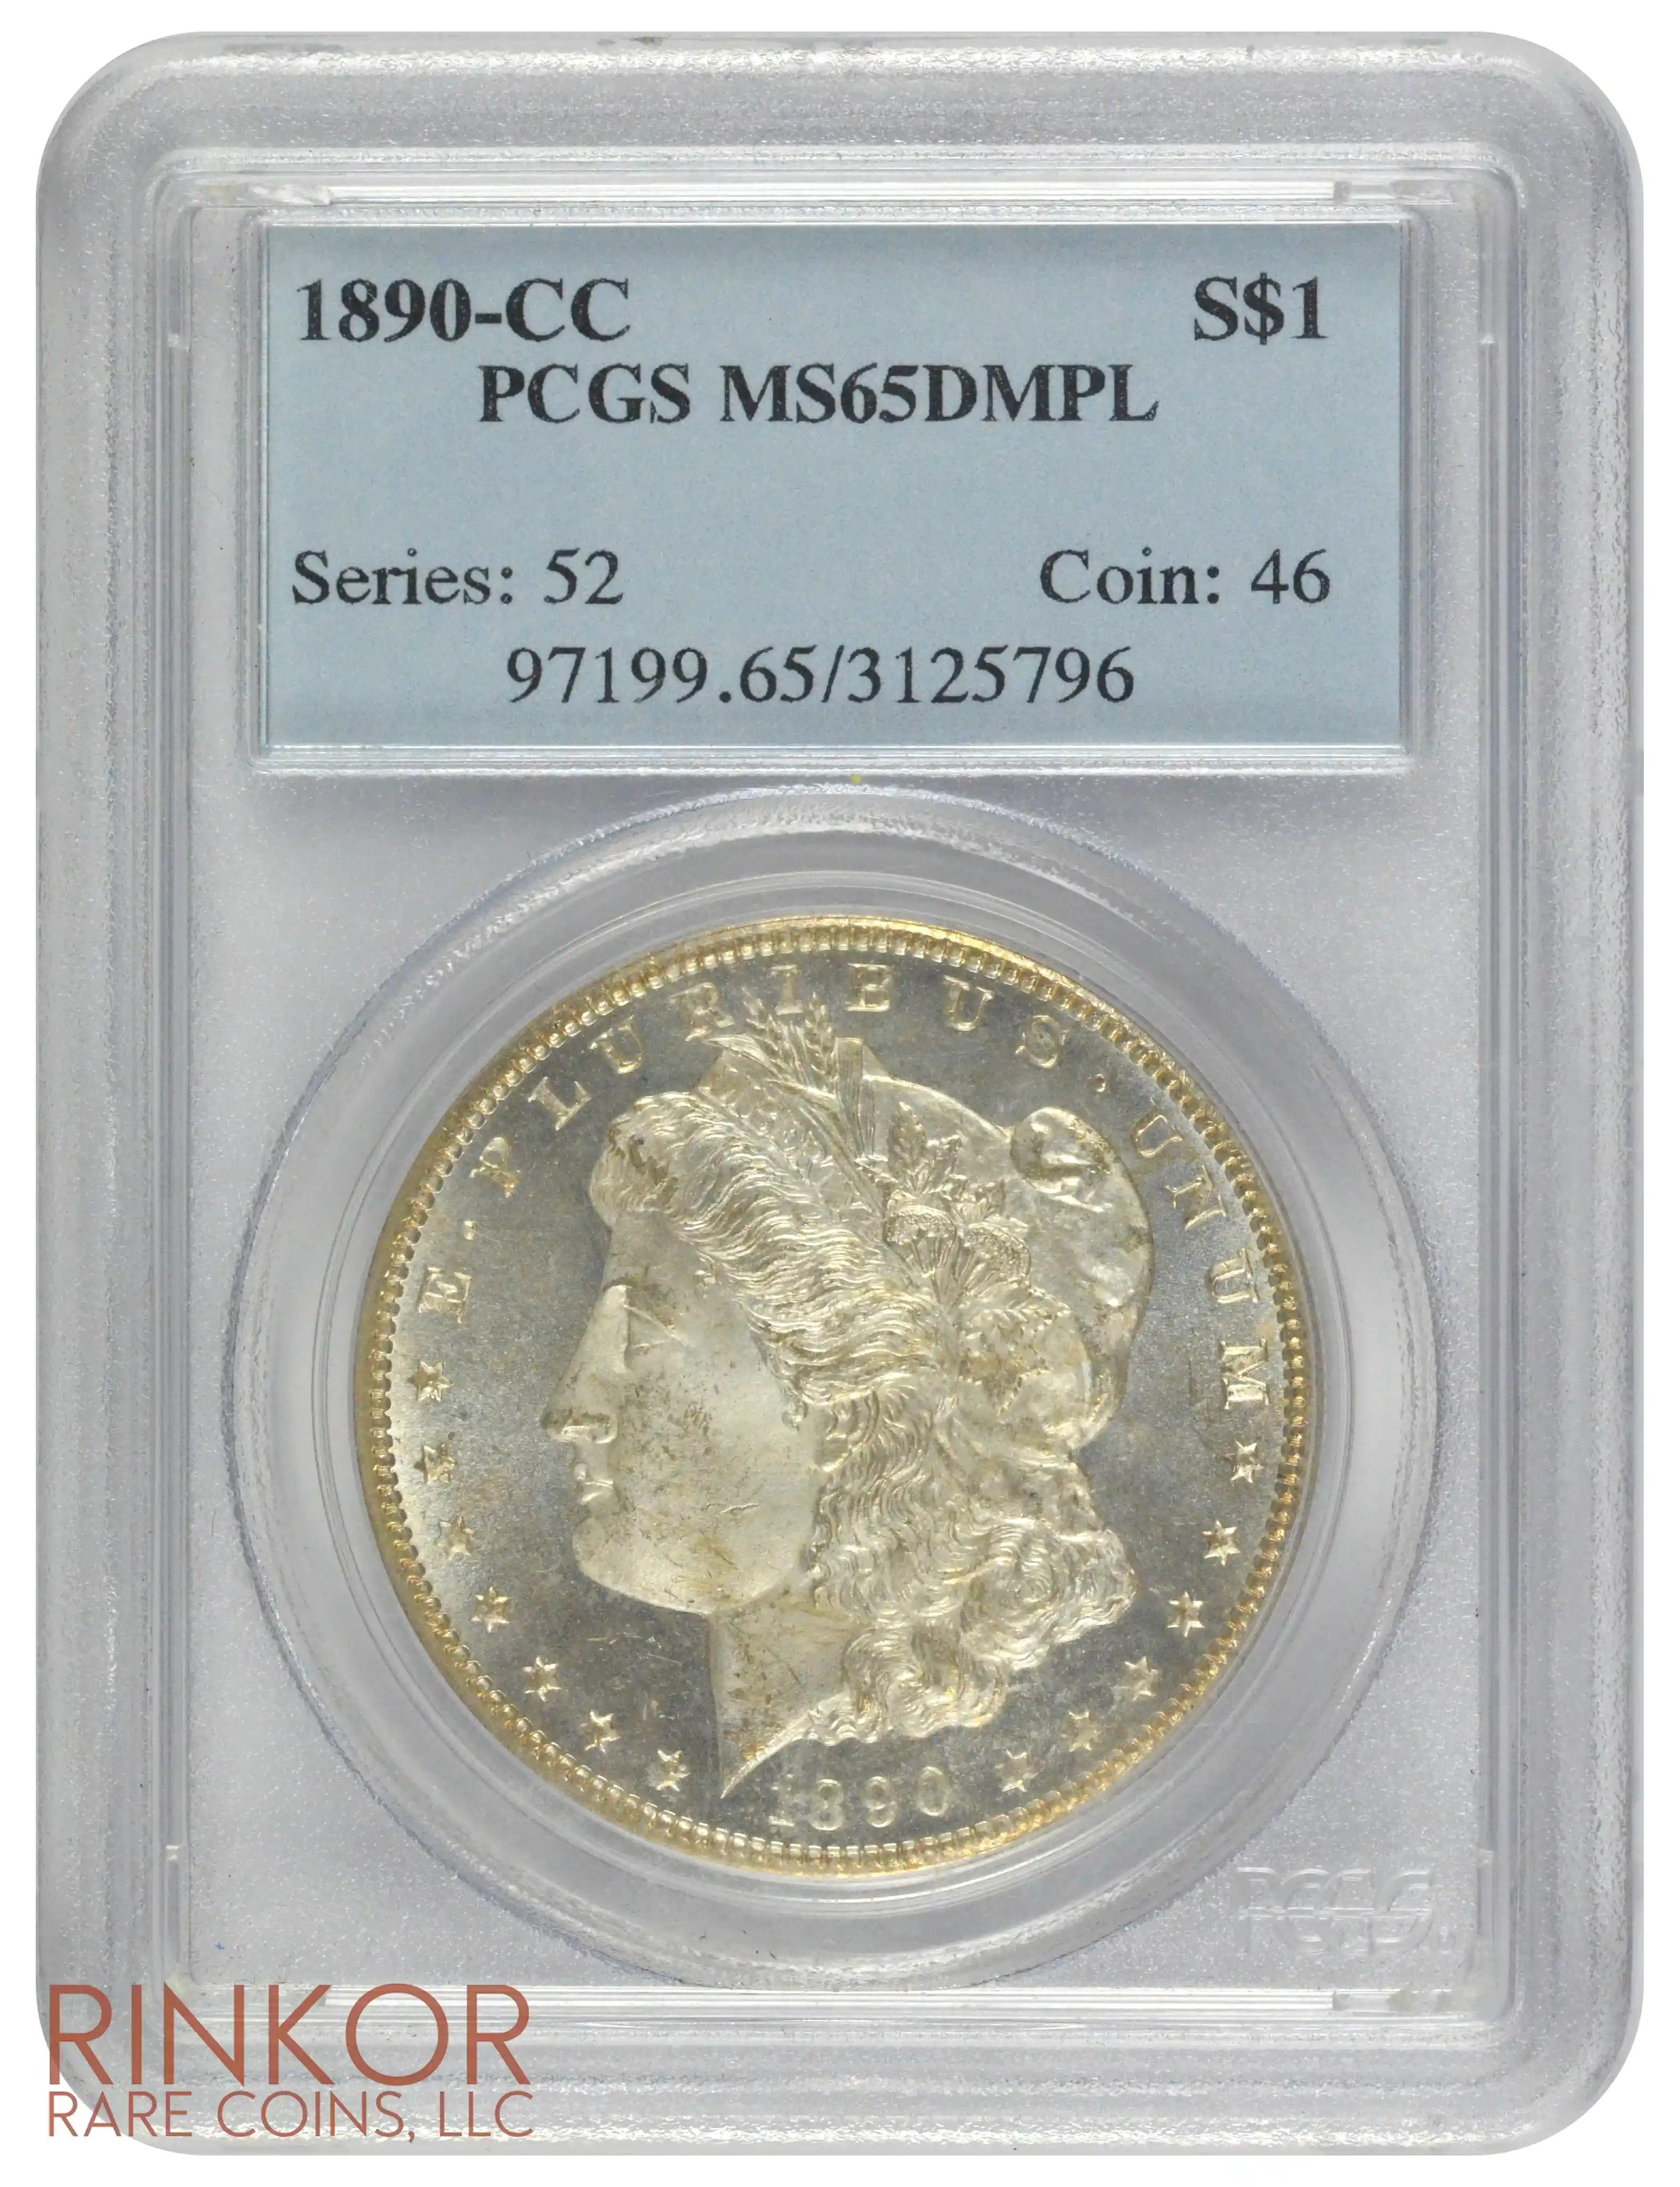 1890-CC $1 PCGS MS 65 DMPL